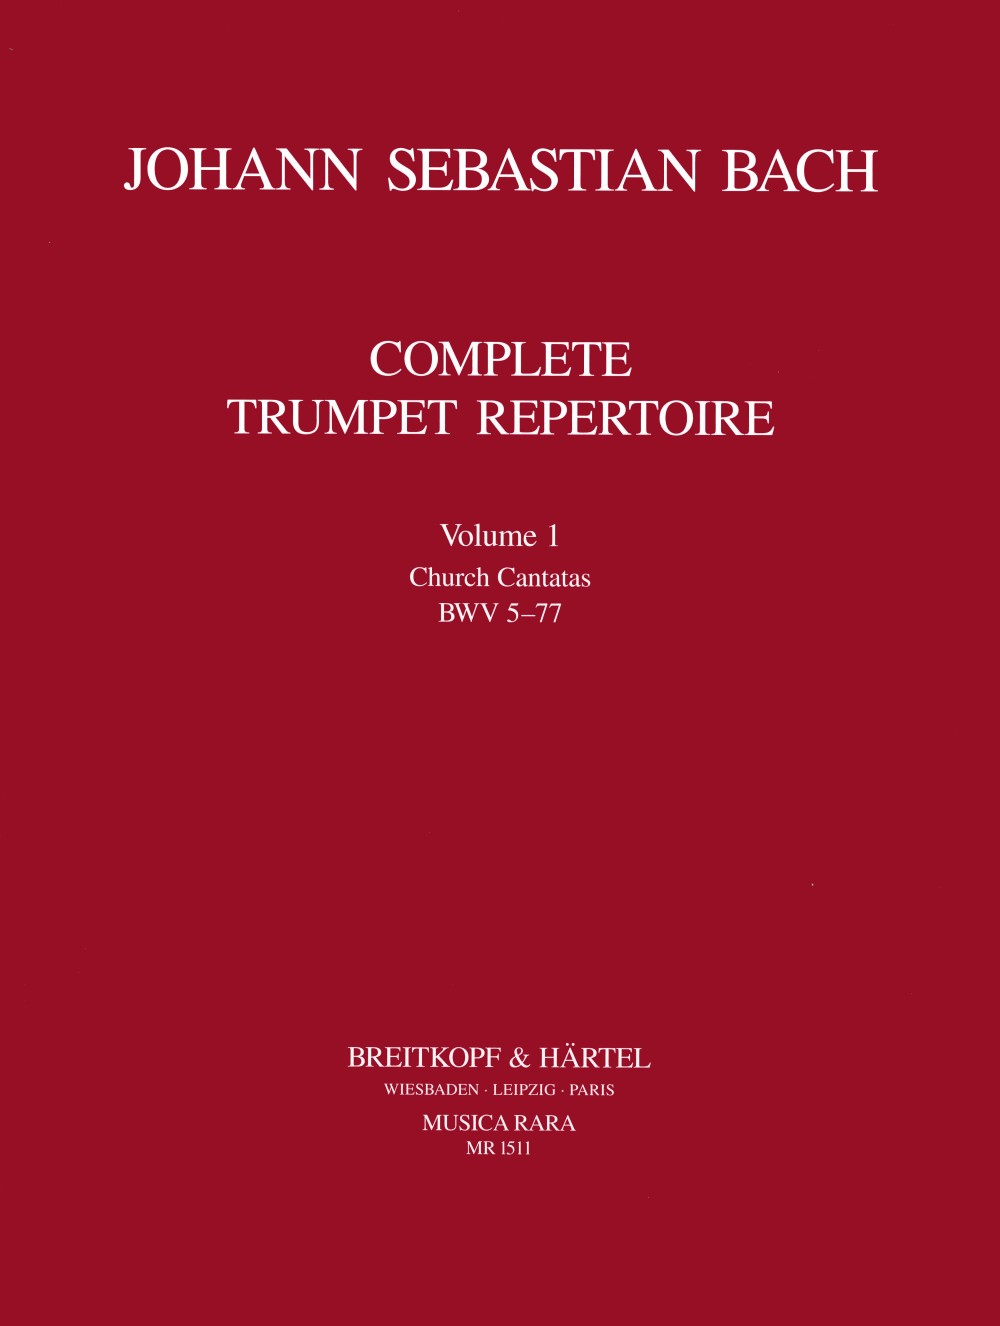 Bach: Complete Trumpet Repertoire - Volume 1 (Church Cantatas, BWV 5-77)